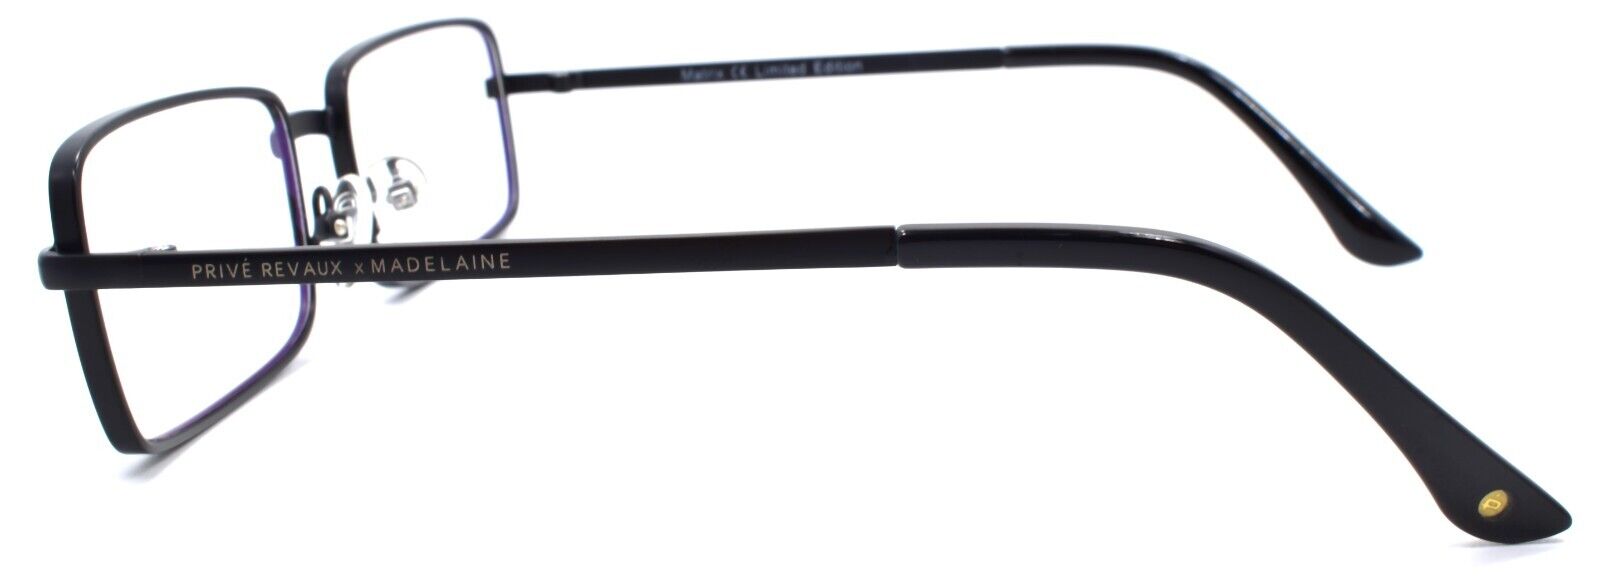 3-Prive Revaux Matrix Eyeglasses Frames Blue Light Blocking RX-ready Black-818893026201-IKSpecs